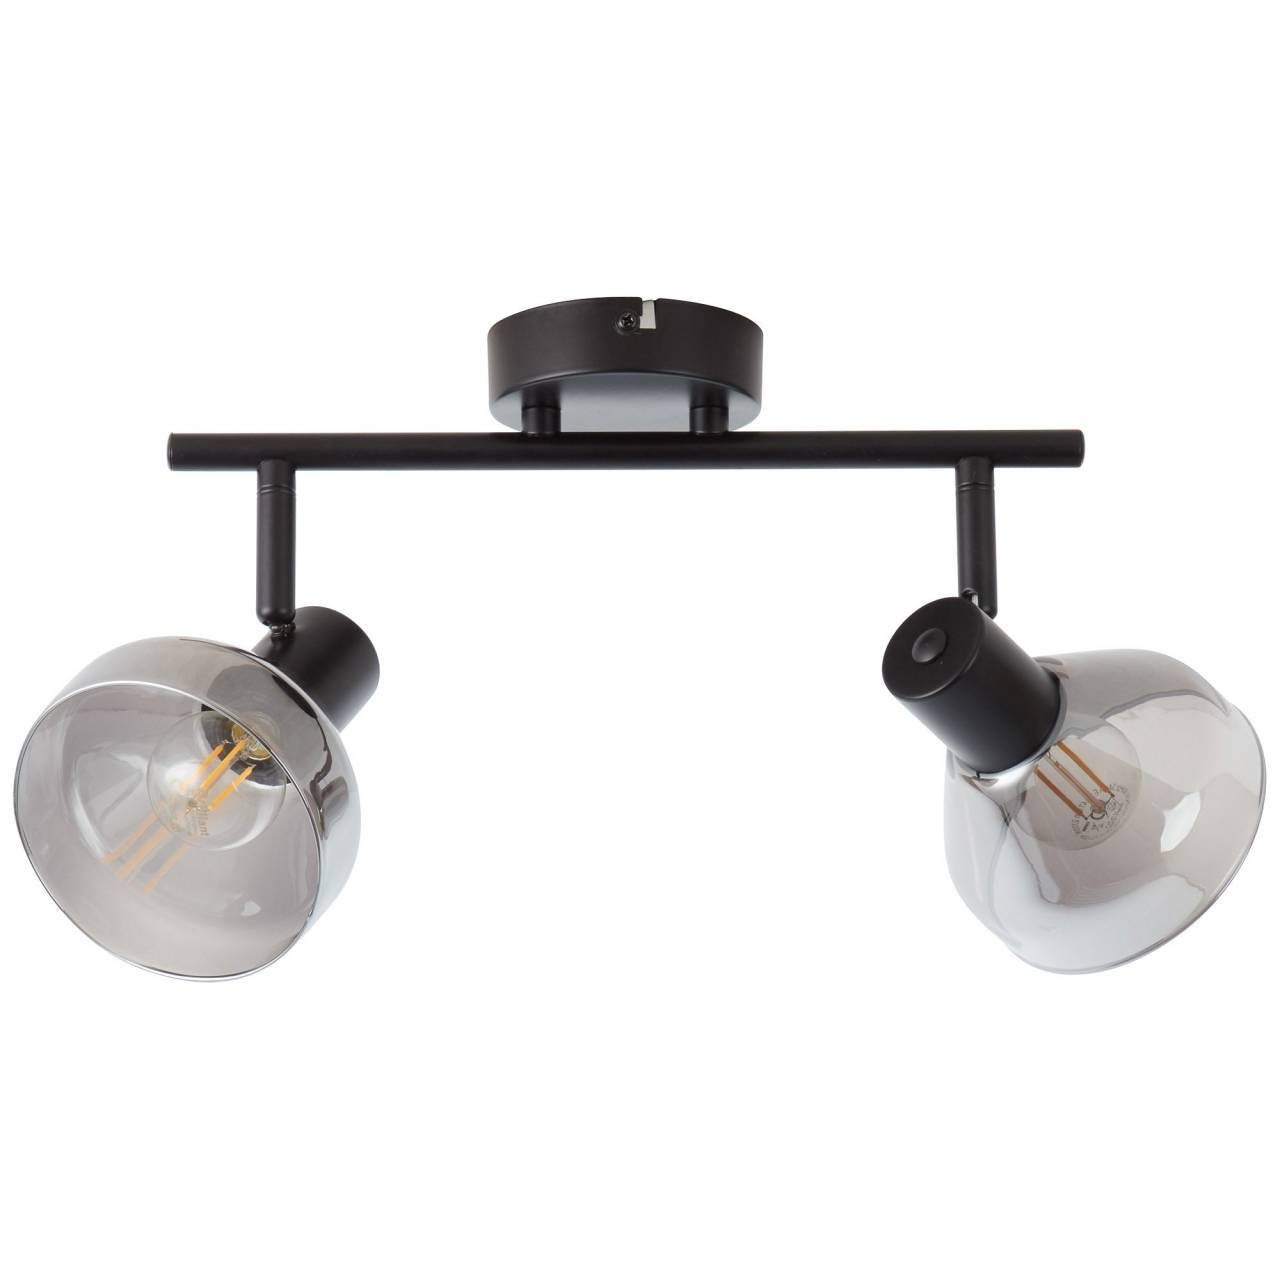 D45, Lampe Brilliant E14, 2x Deckenleuchte 2flg 18W Reflekt, schwarzmatt/rauchglas Reflekt Spotrohr